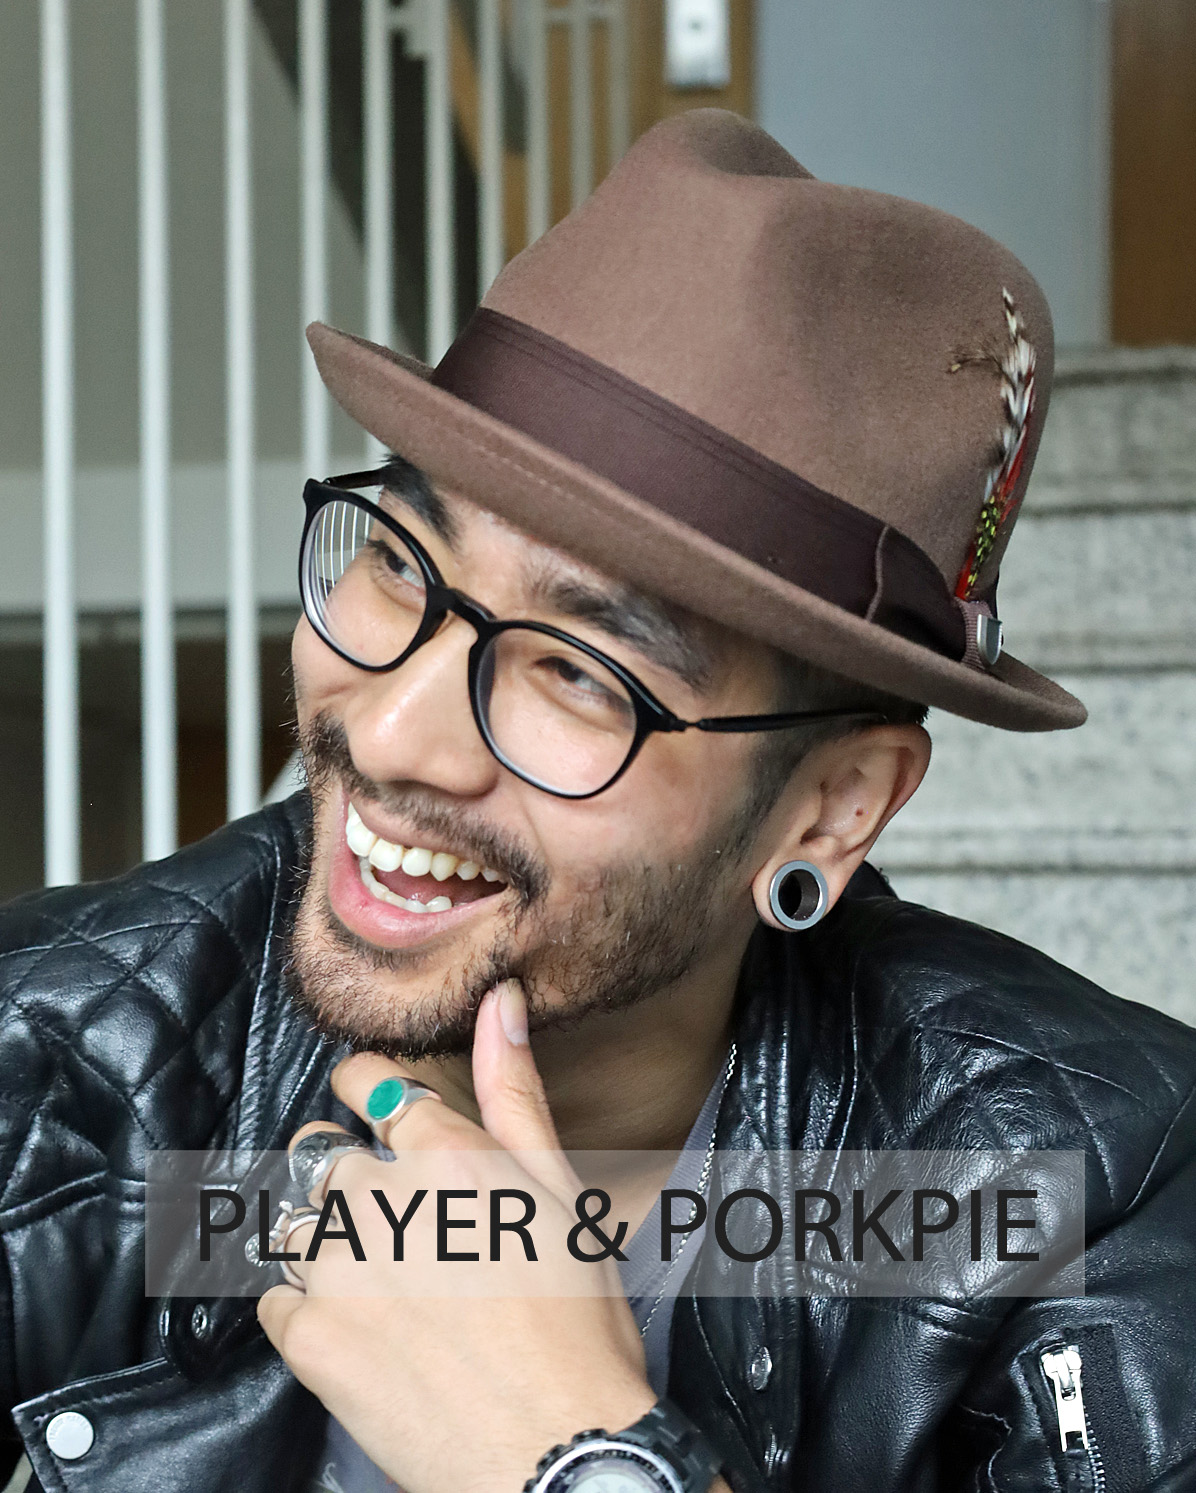 PorkPie and Player Hats